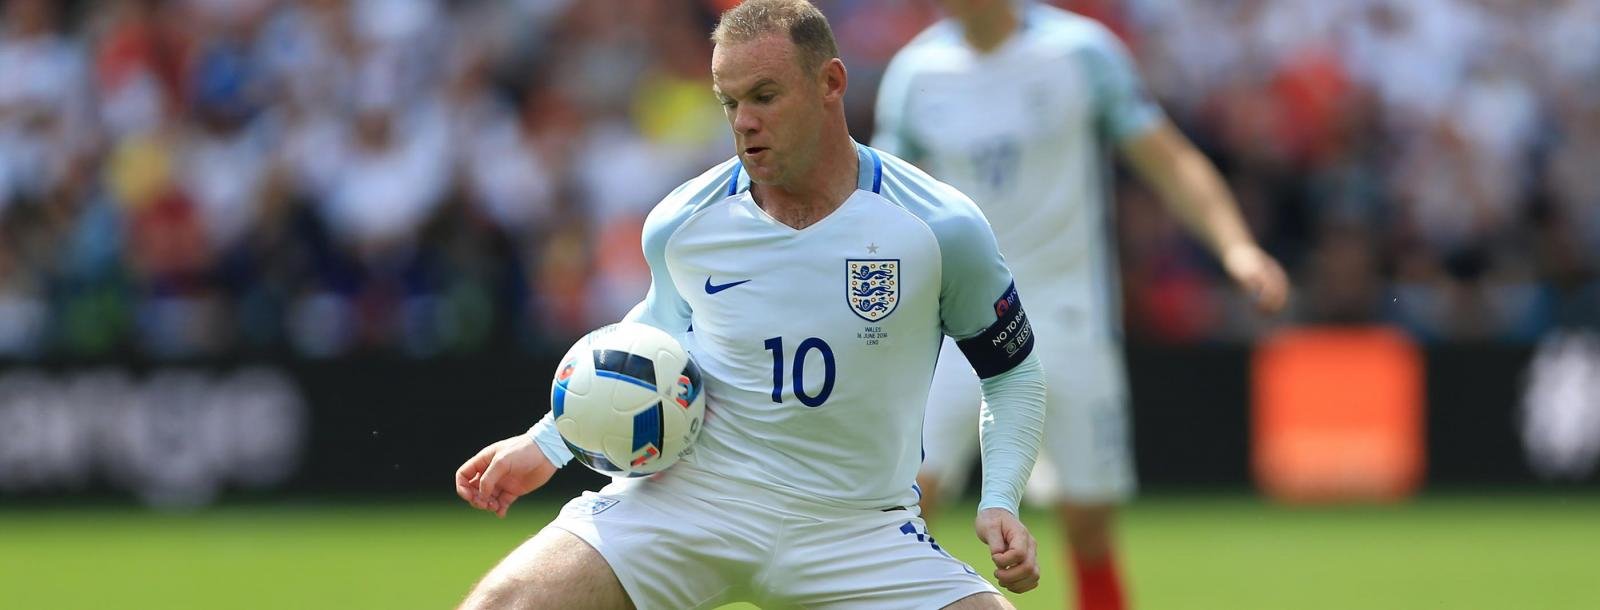 EURO 2016 Q&A: Sundara Karma say England can reach the semis, but Rooney shouldn’t start